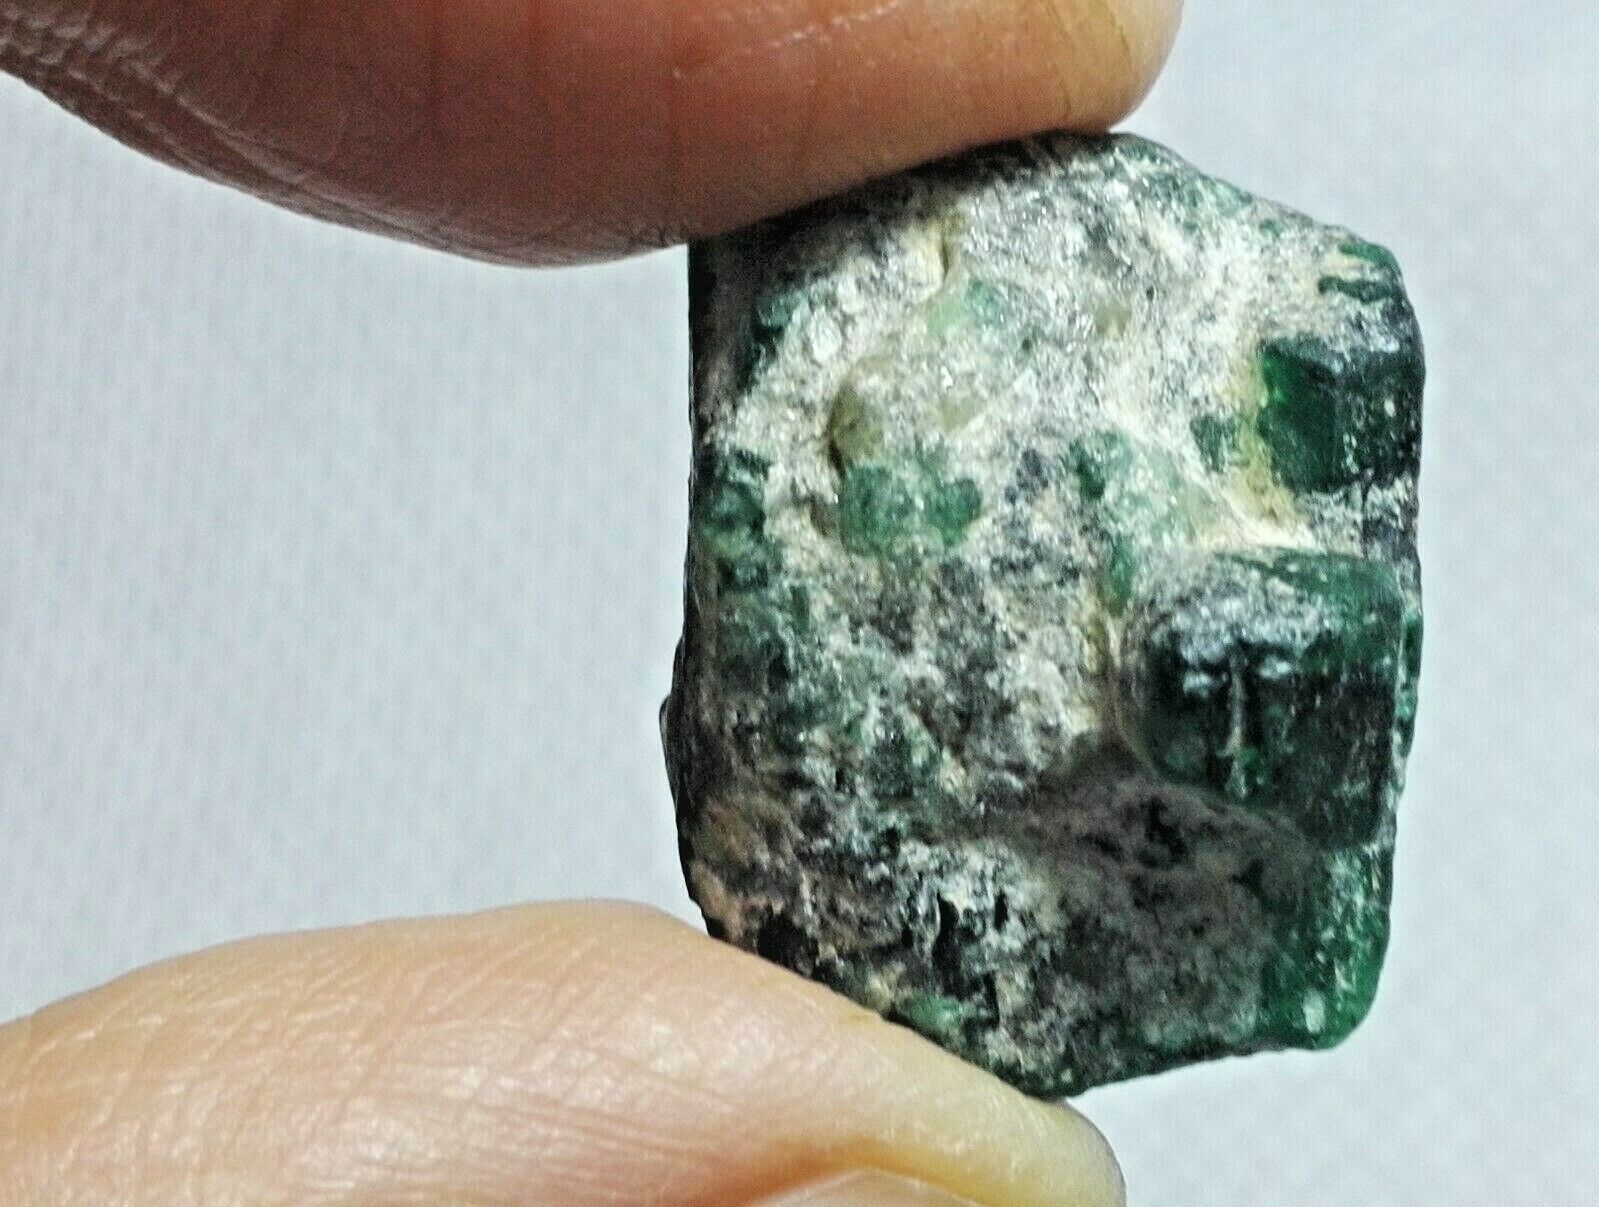 28 cts Beryl var Emerald Crystal Mineral  Specimens from Sawat, Pakistan